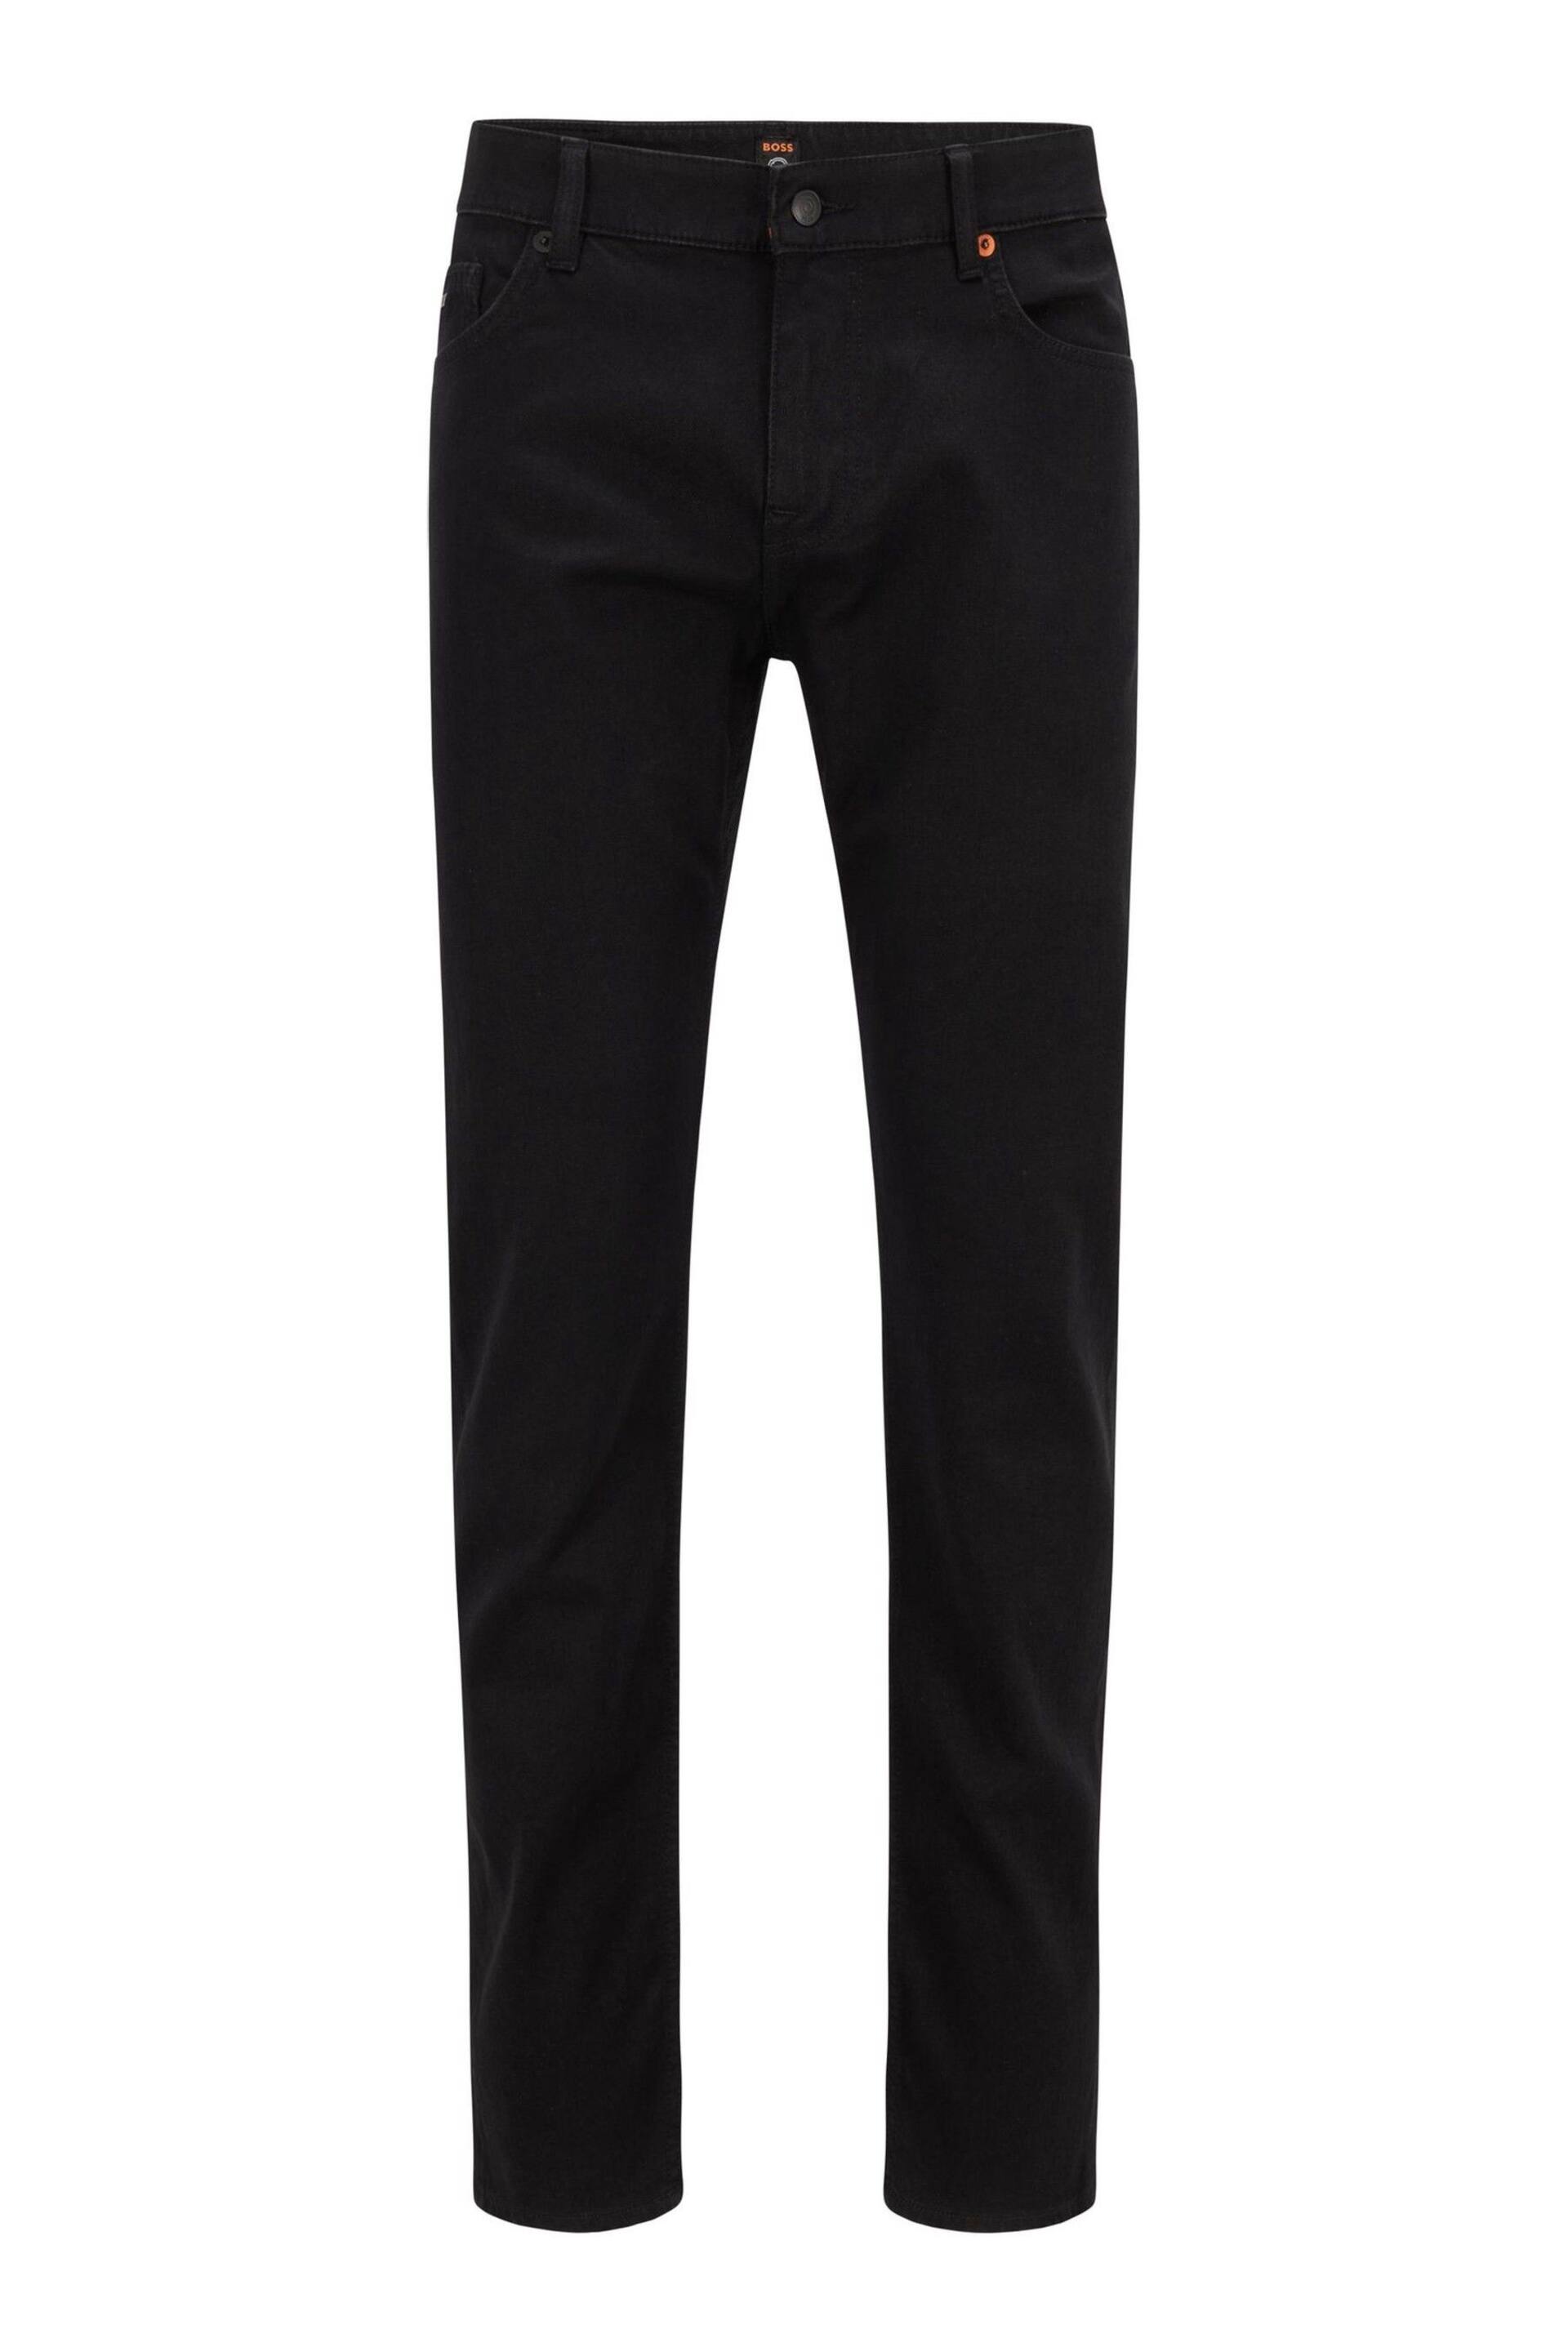 BOSS Black Slim Fit Comfort Stretch Denim Jeans - Image 5 of 5